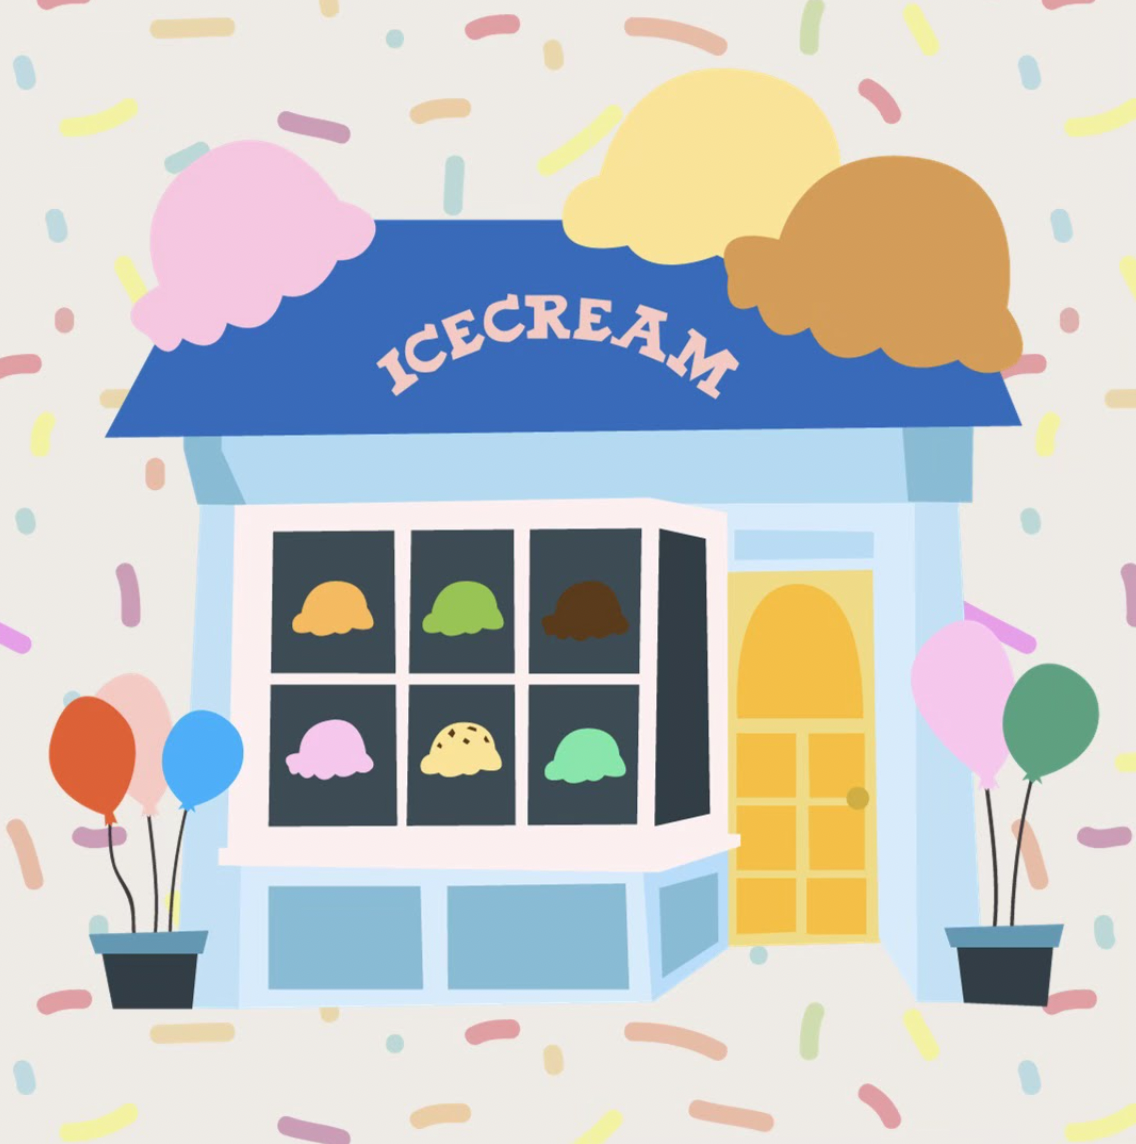 Downtown Milledgeville needs an ice cream shop